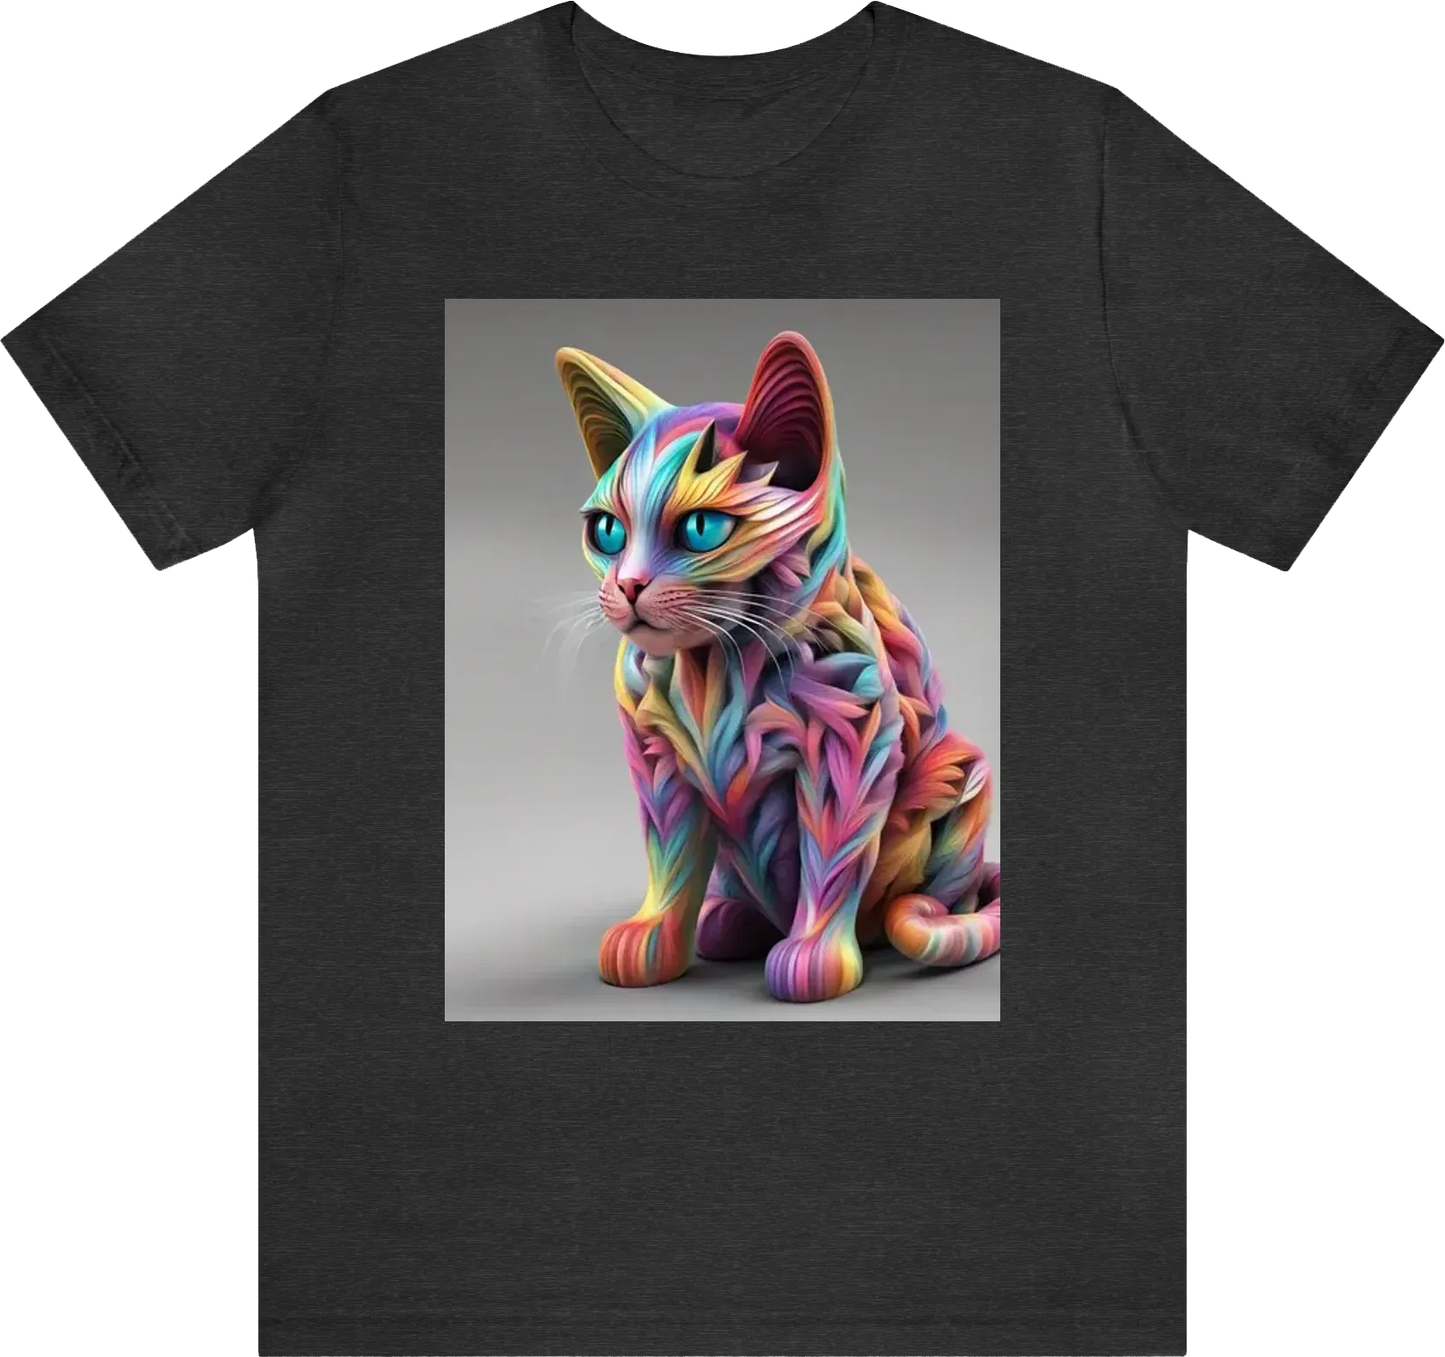 Colorful cat designed as 3d